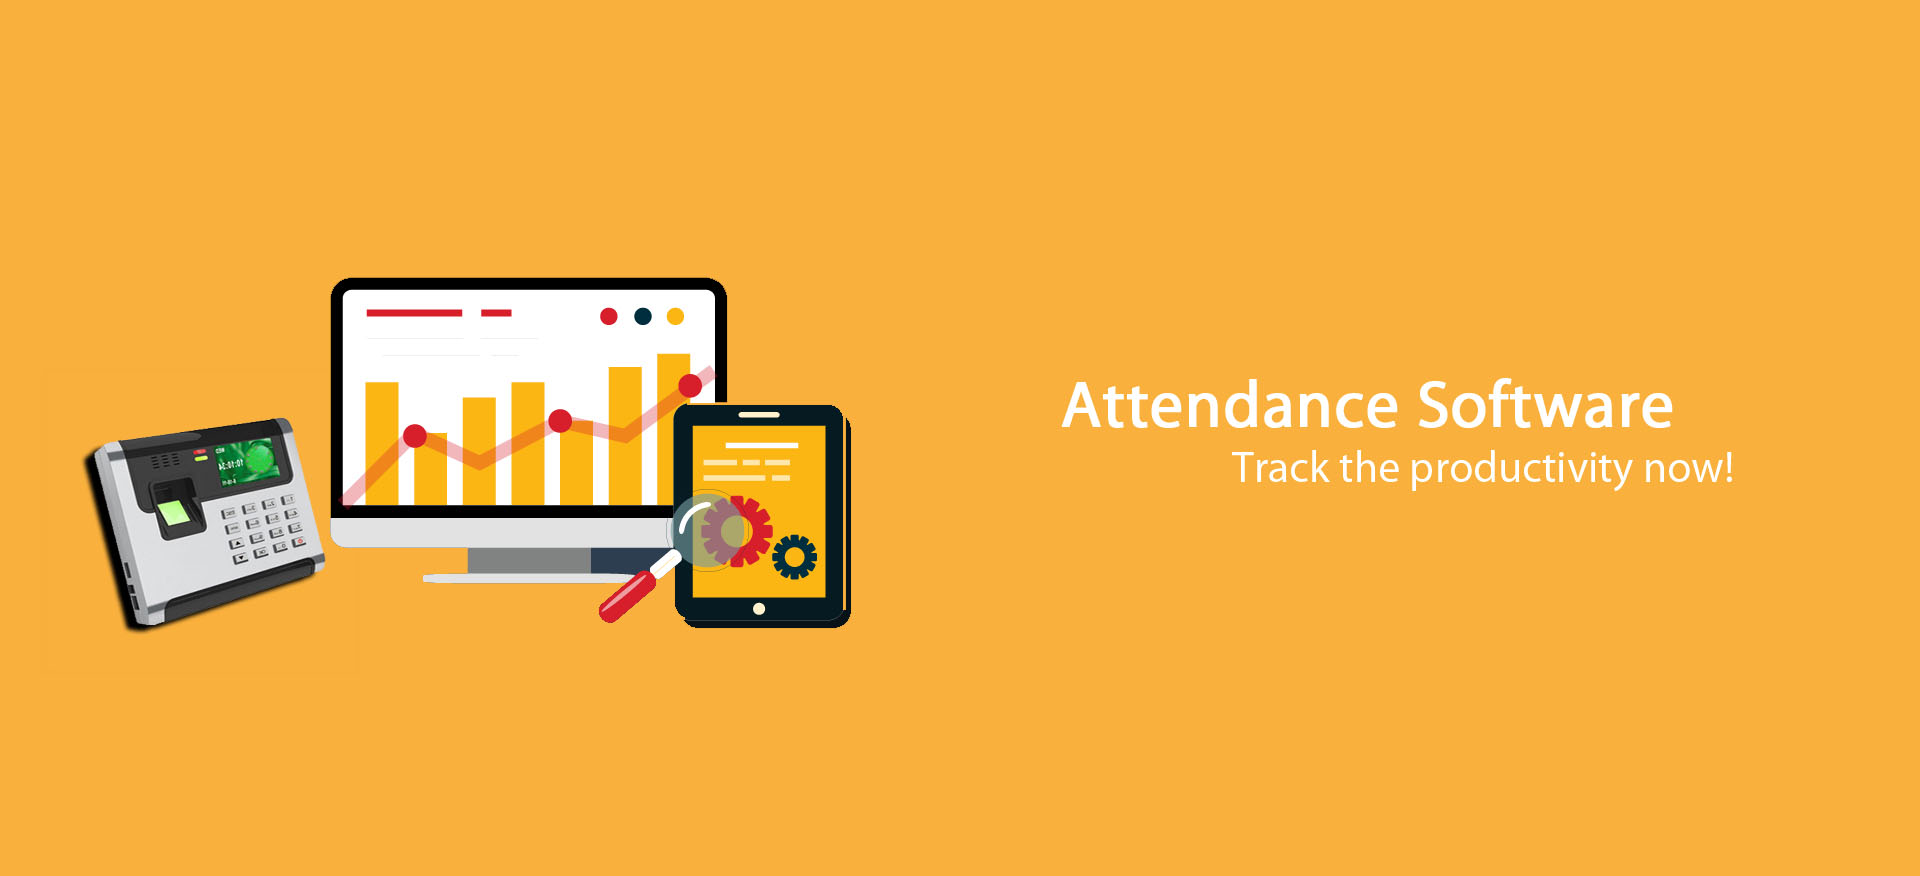 download zk attendance management software